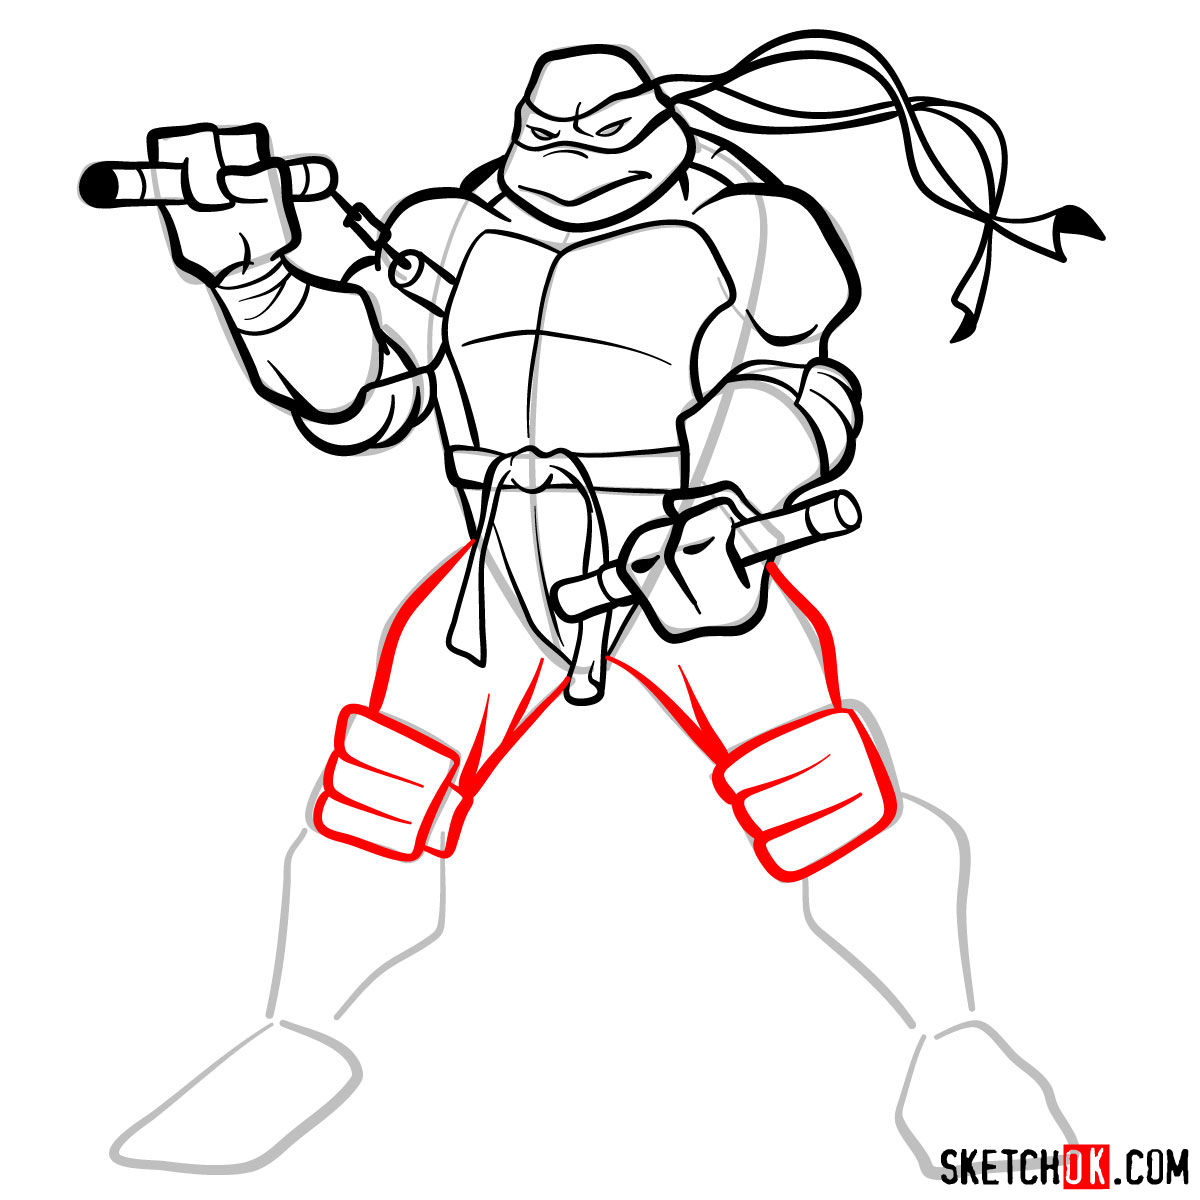 How to draw Michaelangelo ninja turtle - step 11